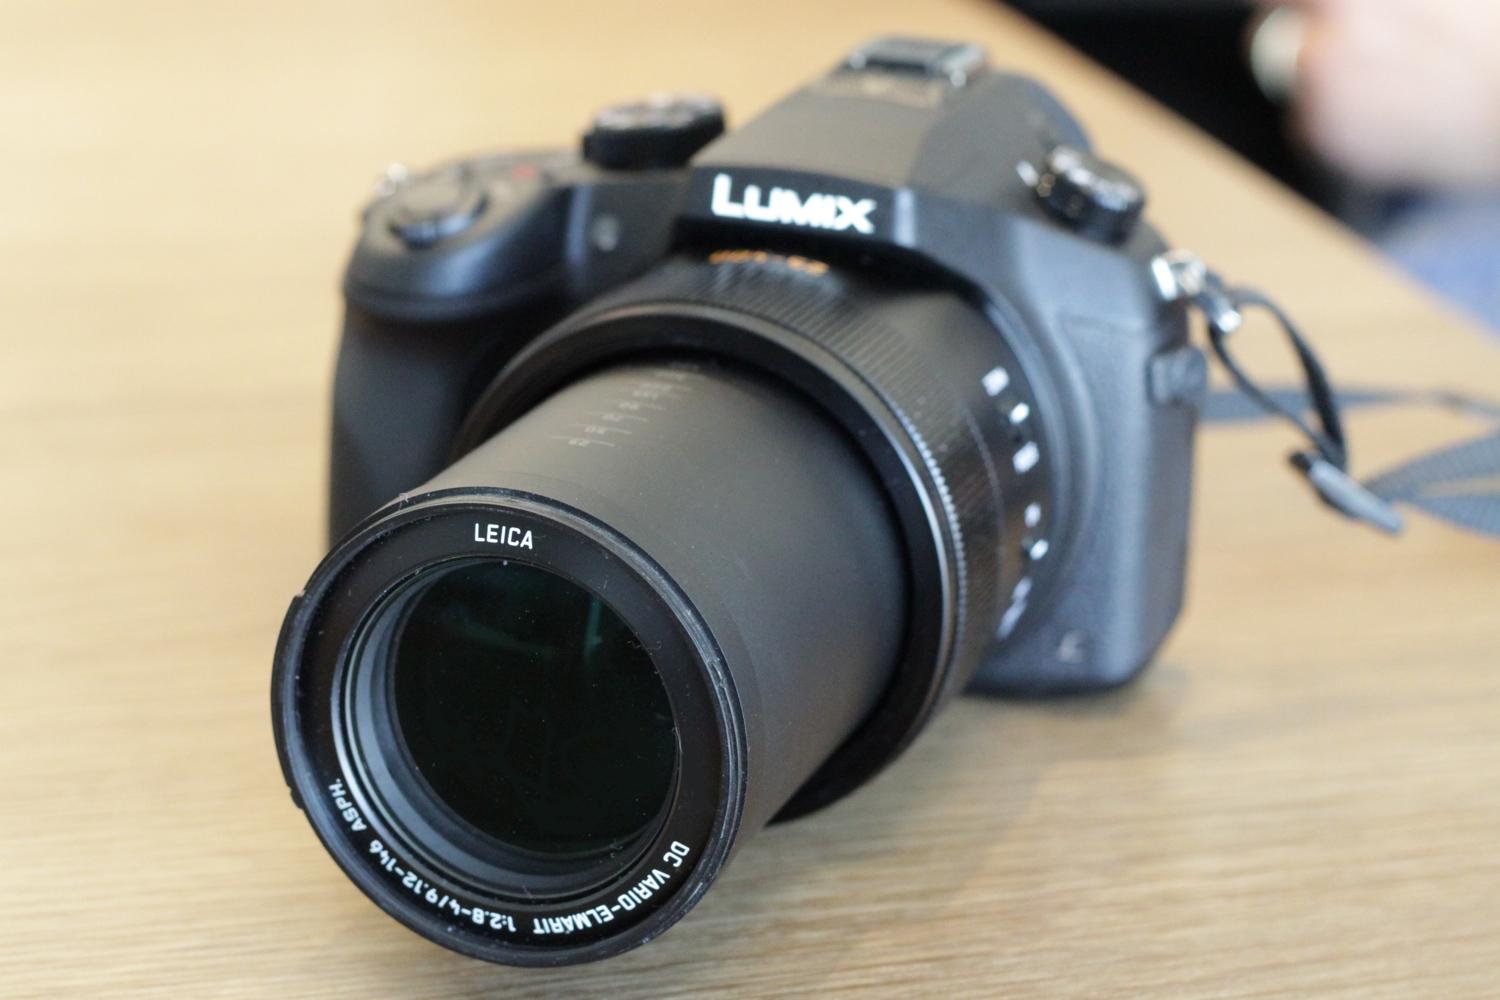 panasonic introduces 4k capable lumix fz1000 bridge camera img 1294